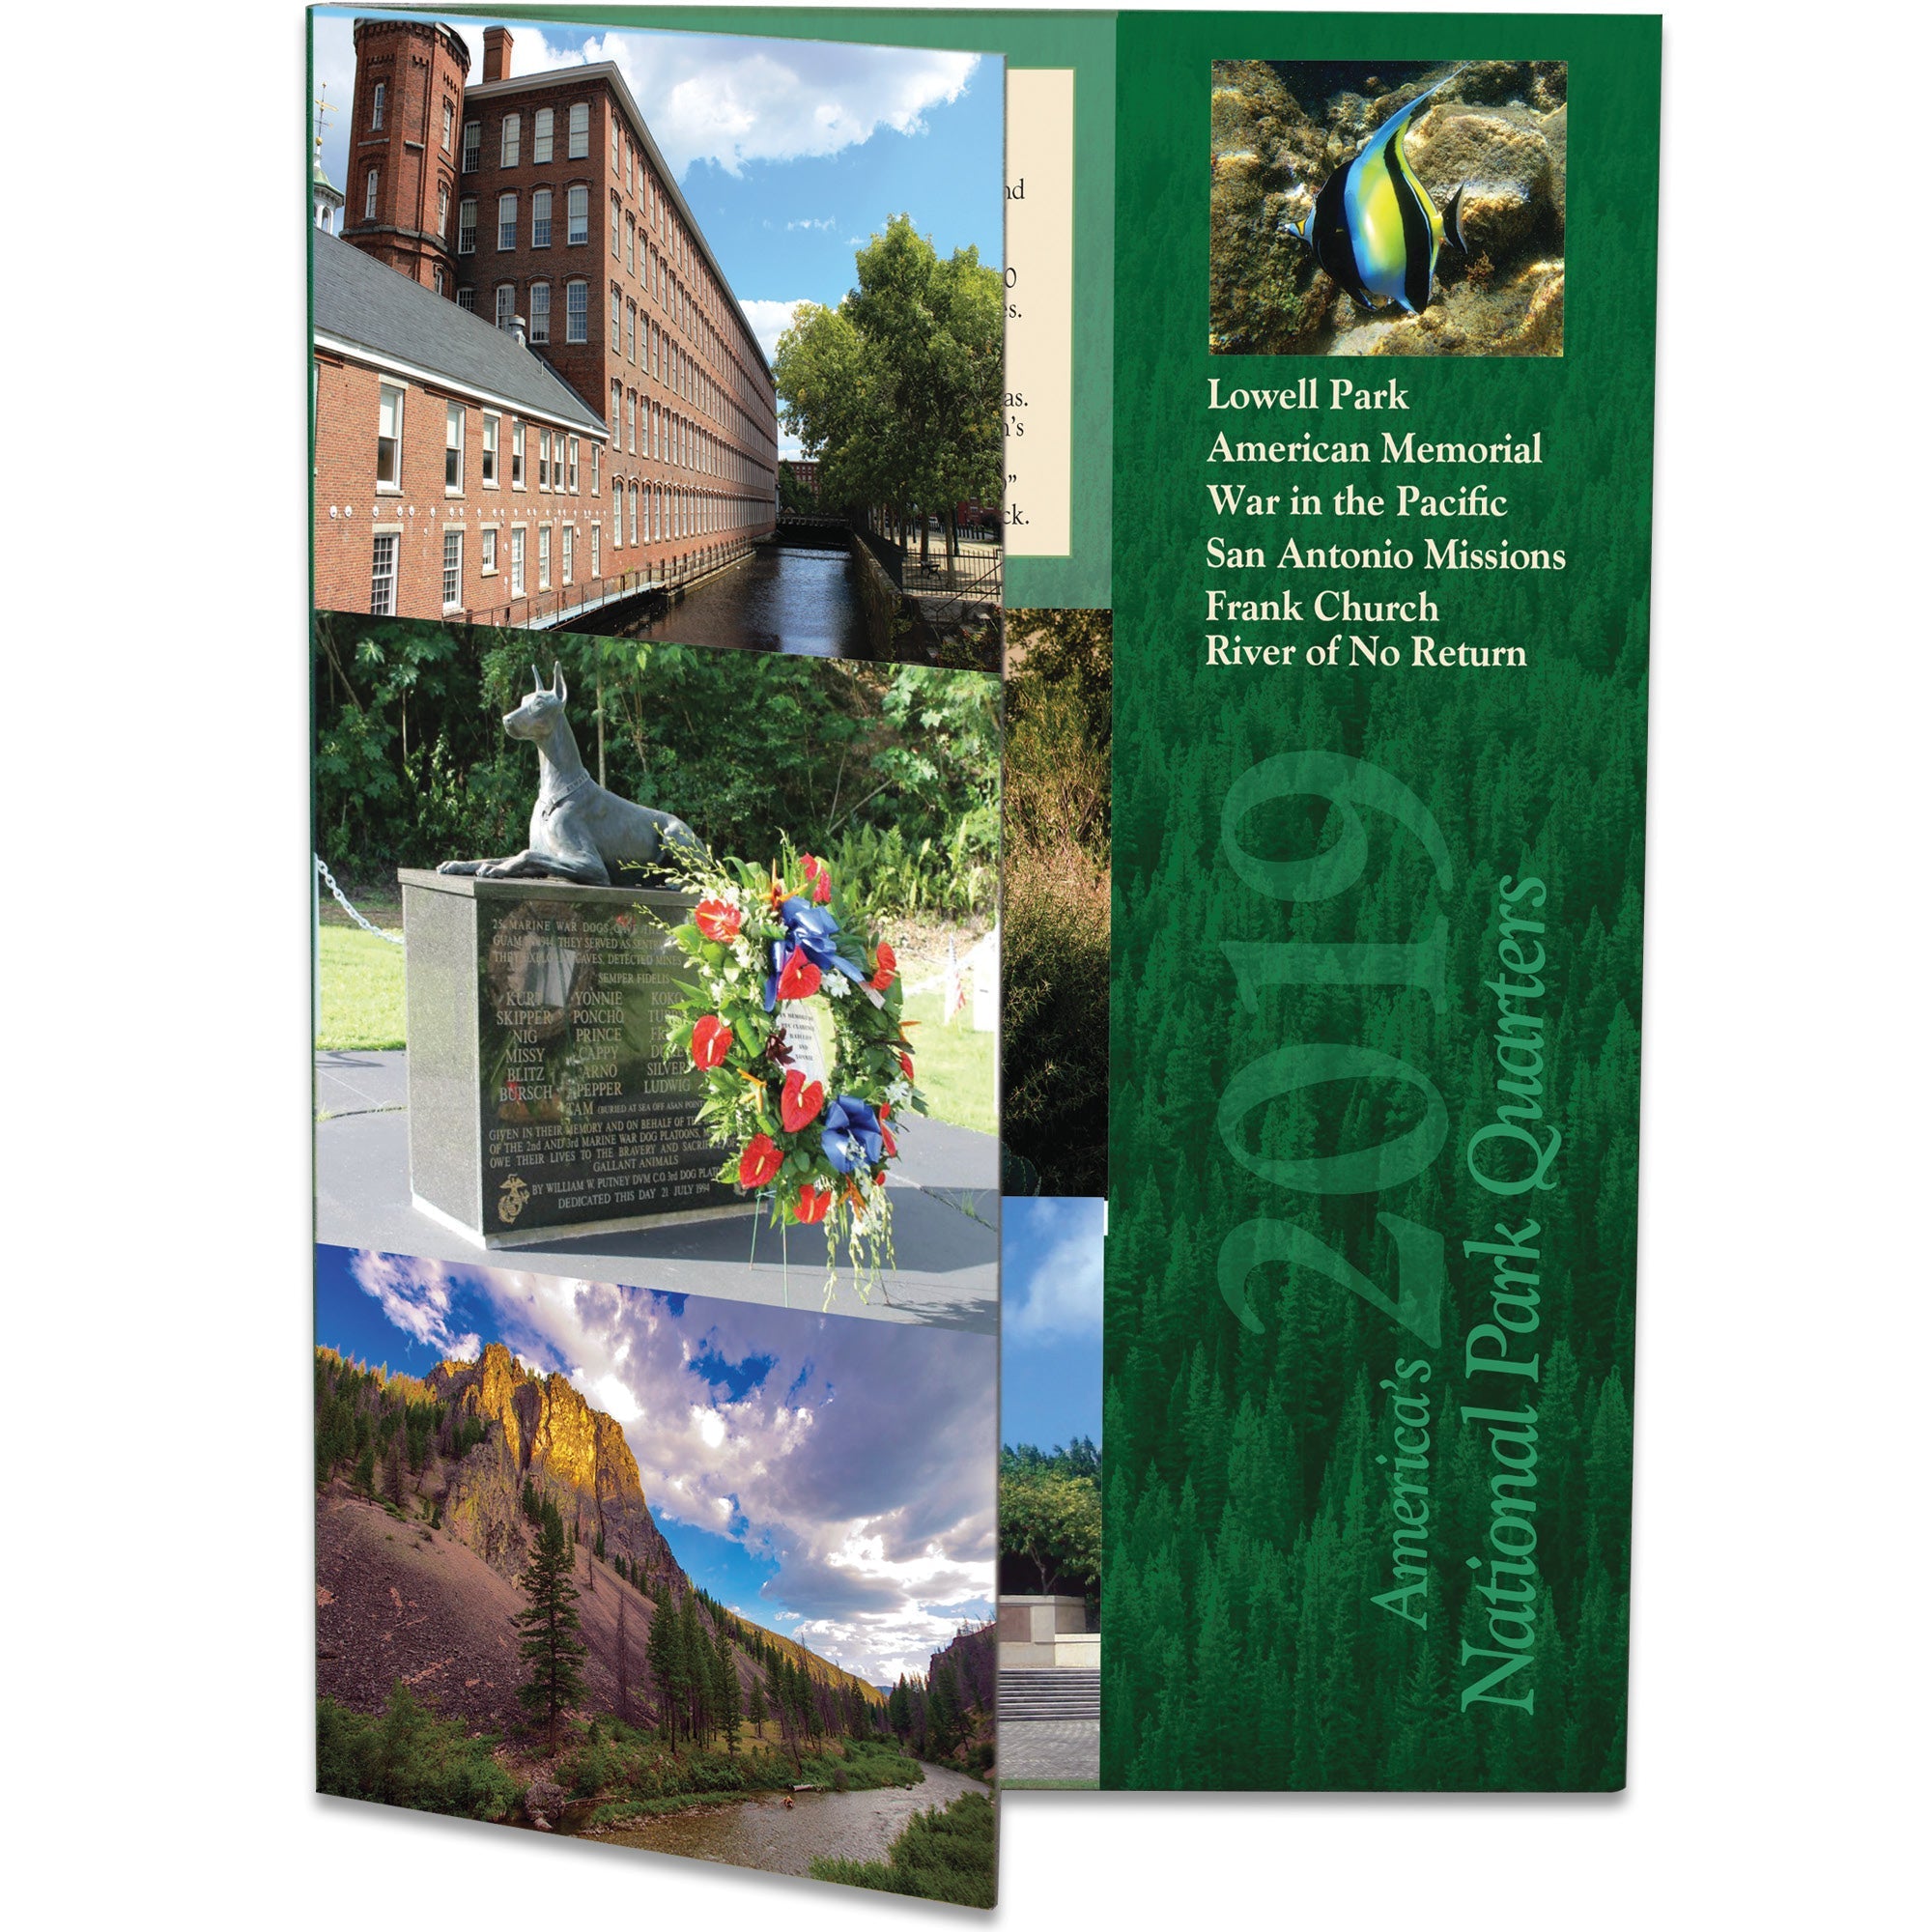 2019 America's National Park Quarter Series Colorful Folder Littleton